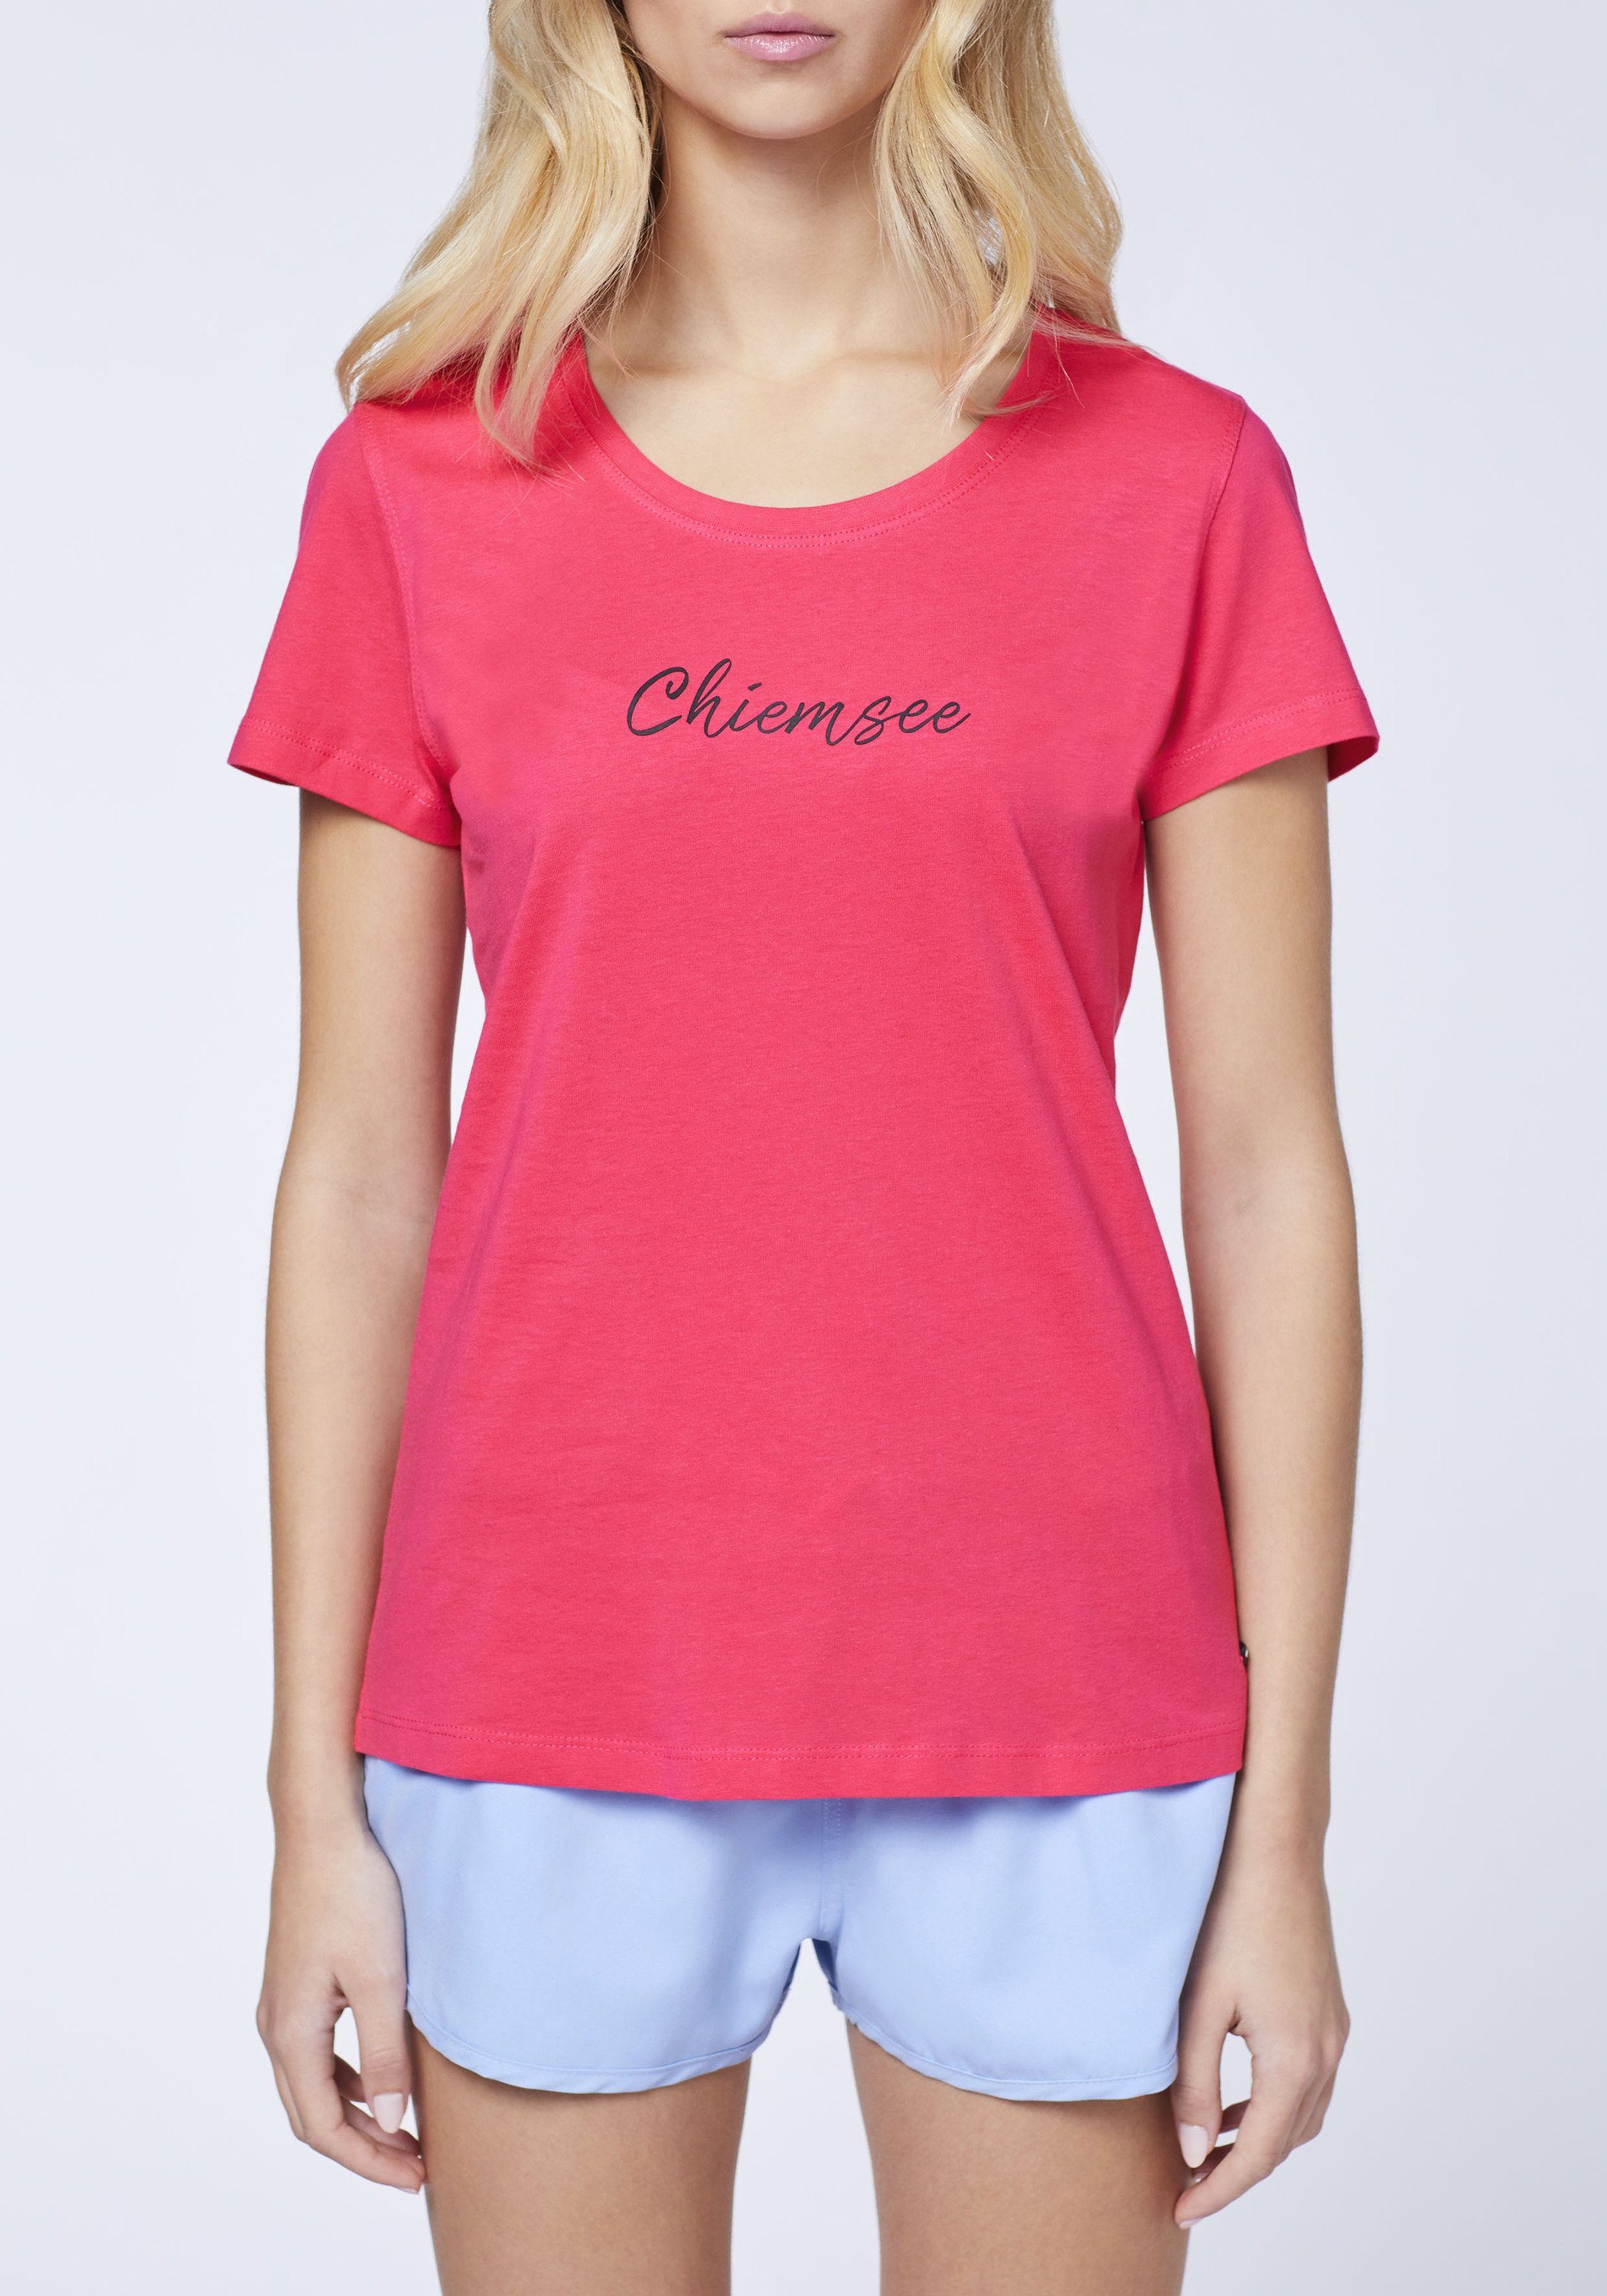 T-Shirt Chiemsee im 1 Raspberry 18-1754 Label-Look Print-Shirt